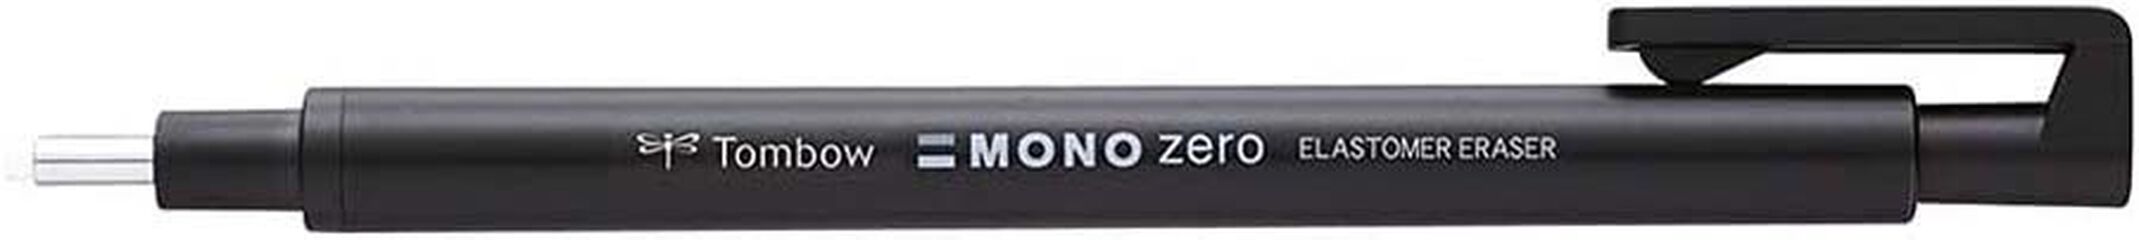 Portagomes Tombow Mono Zero negre